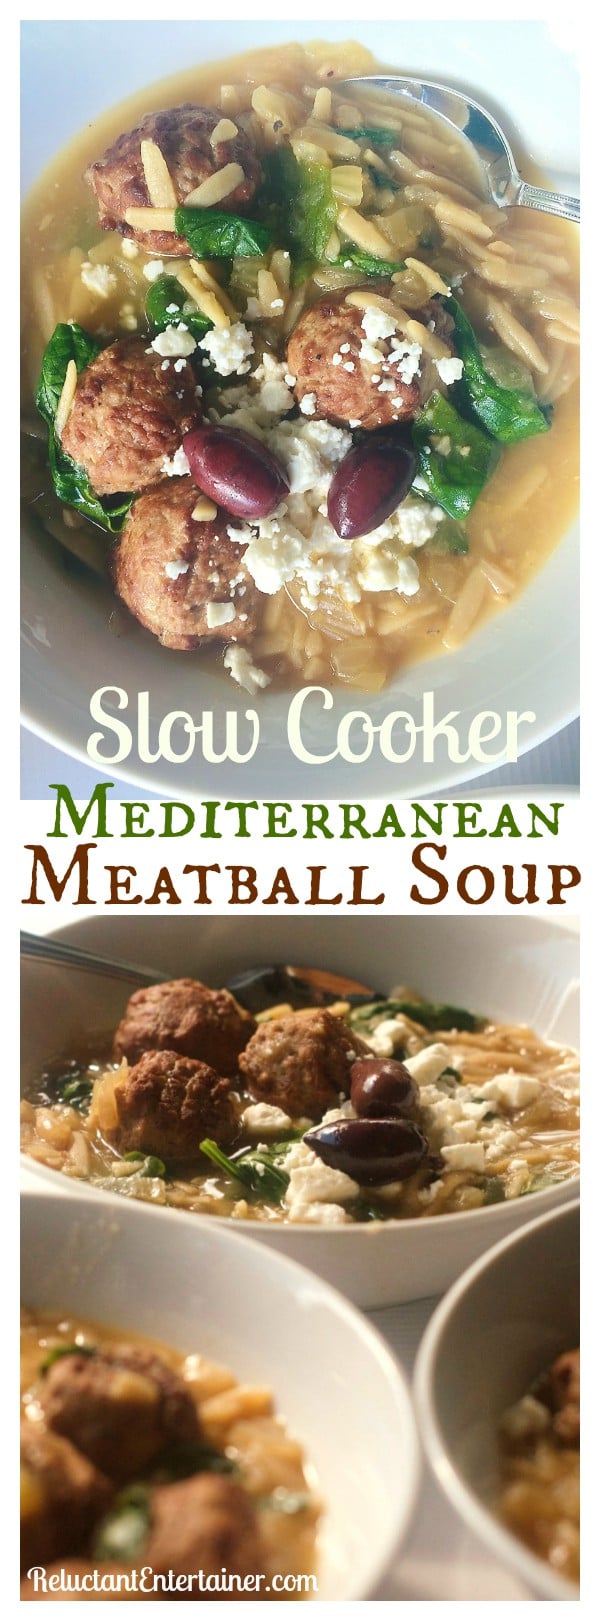 Slow Cooker Mediterranean Meatball Soup